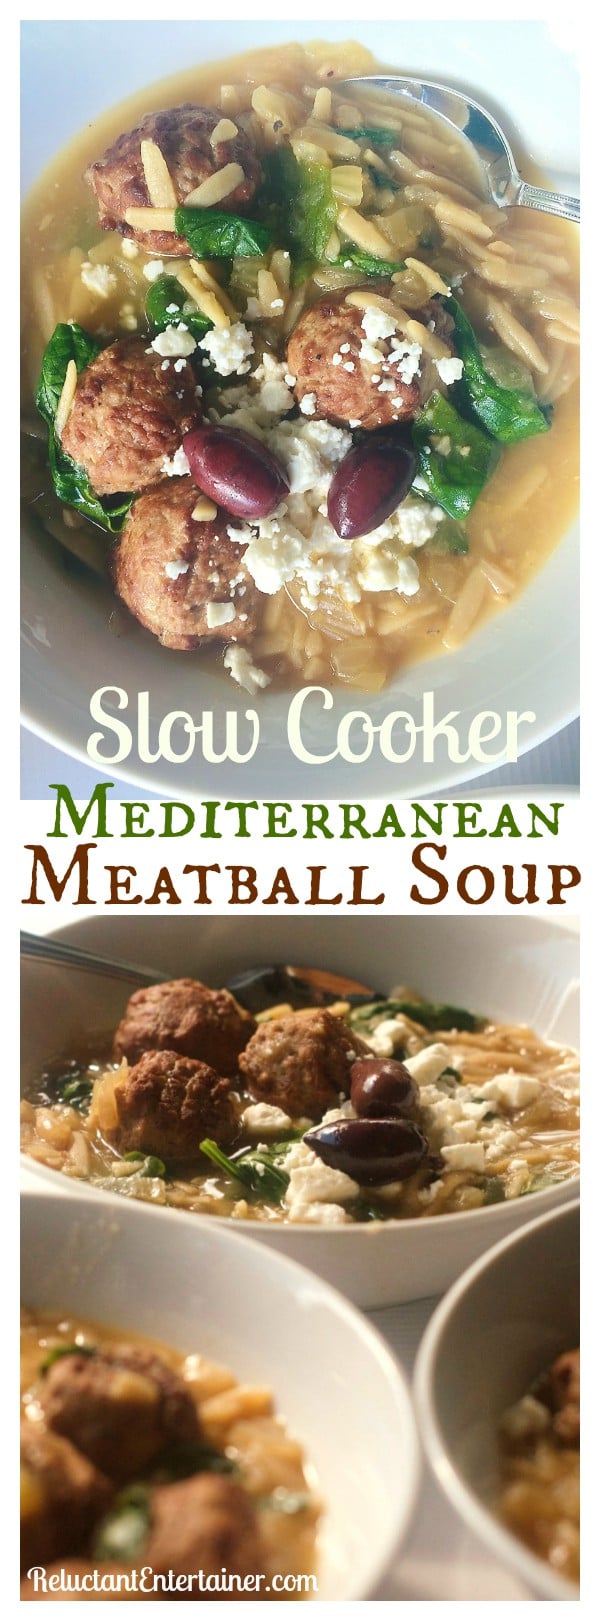 Slow Cooker Mediterranean Meatball Soup